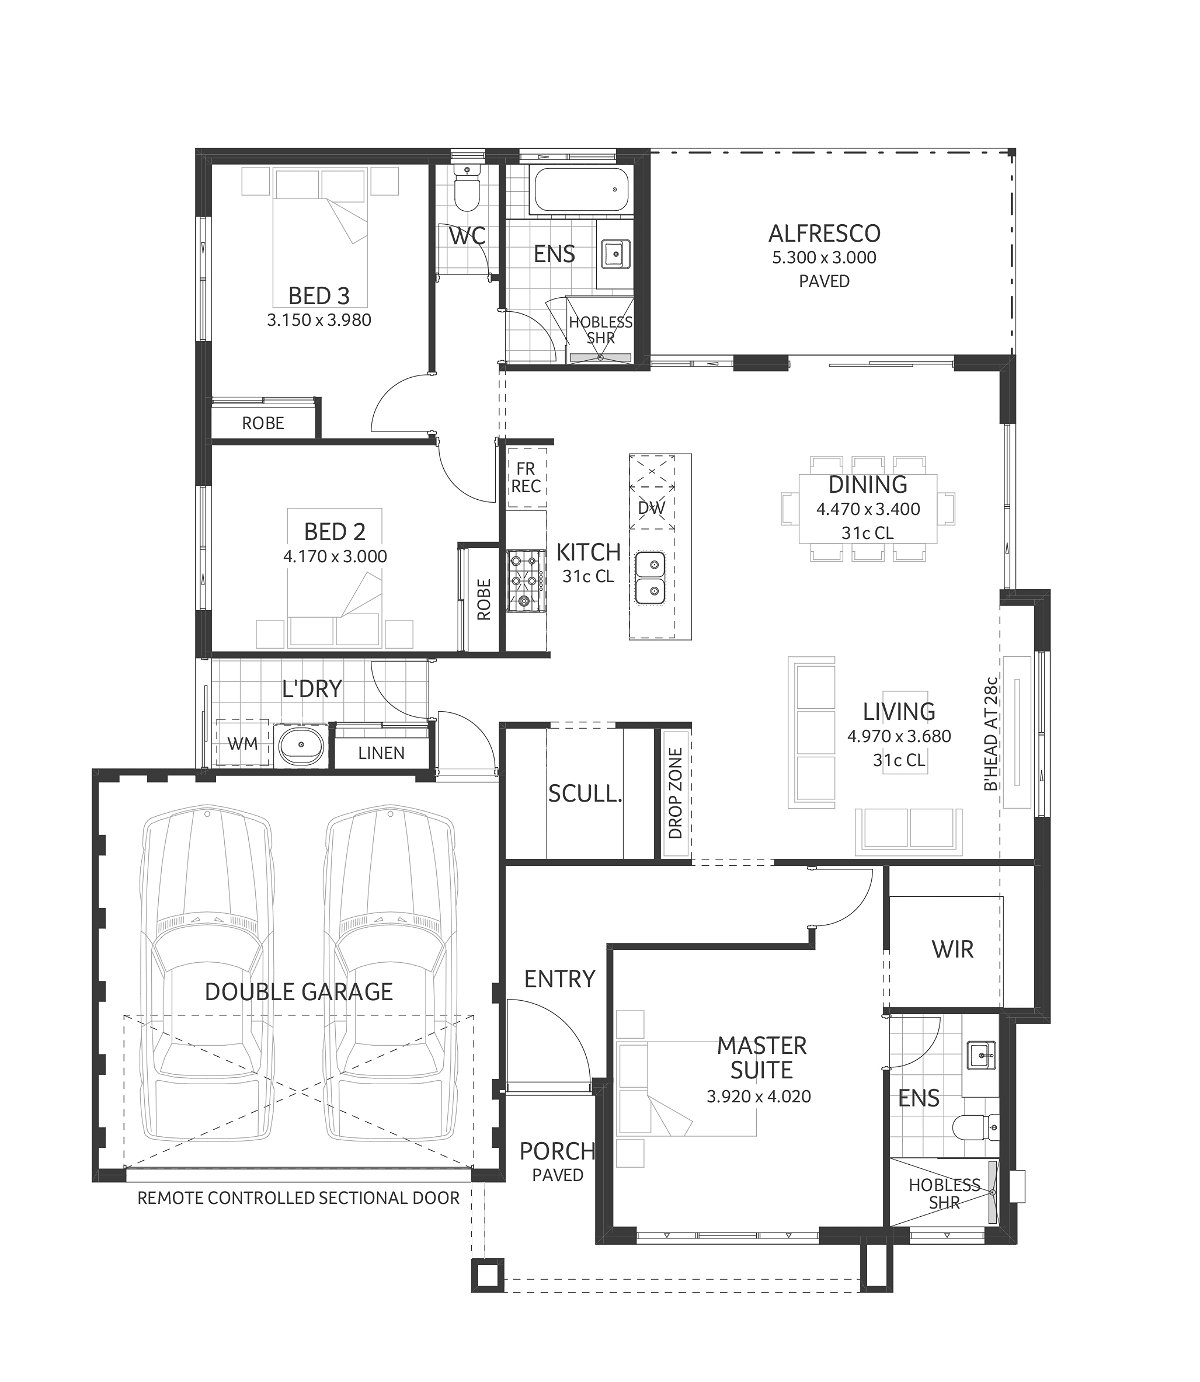 Plunkett Homes - Sandalwood | Federation - Floorplan - Sandalwood Luxe Marketing Plan Croppedjpg 1